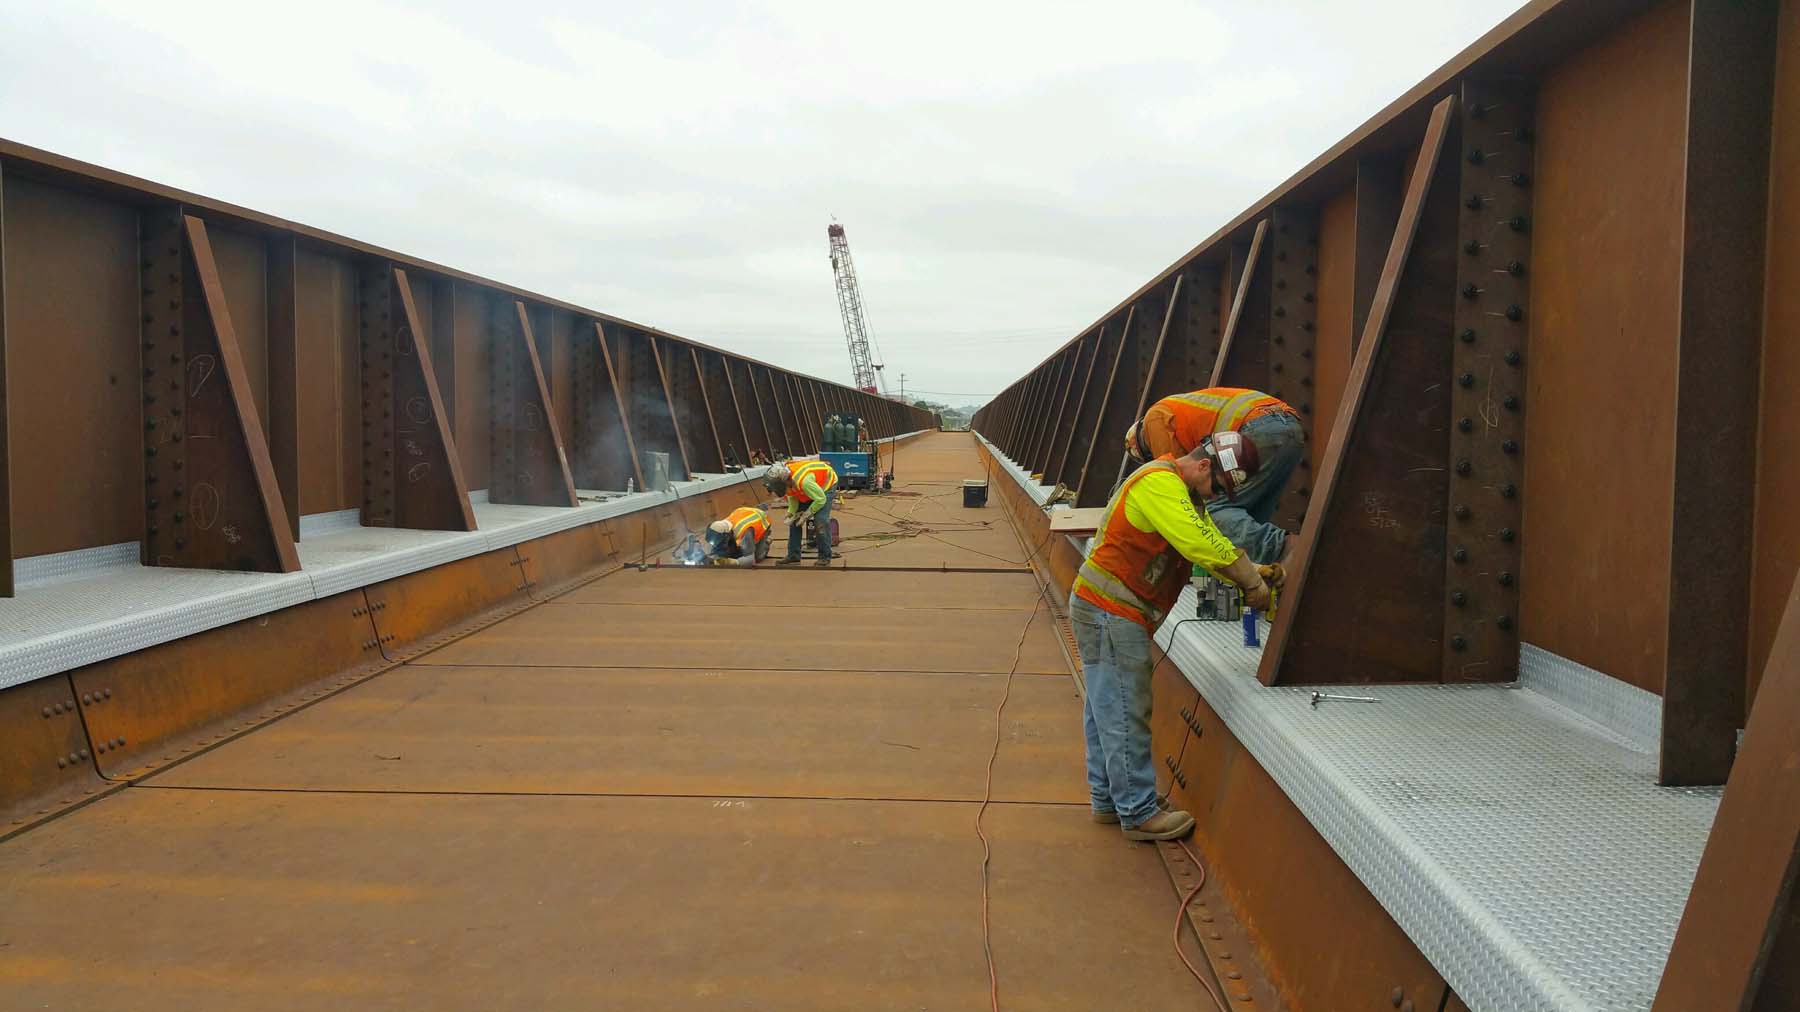 Olsen Beal team working on San Diego River Bridge construction project